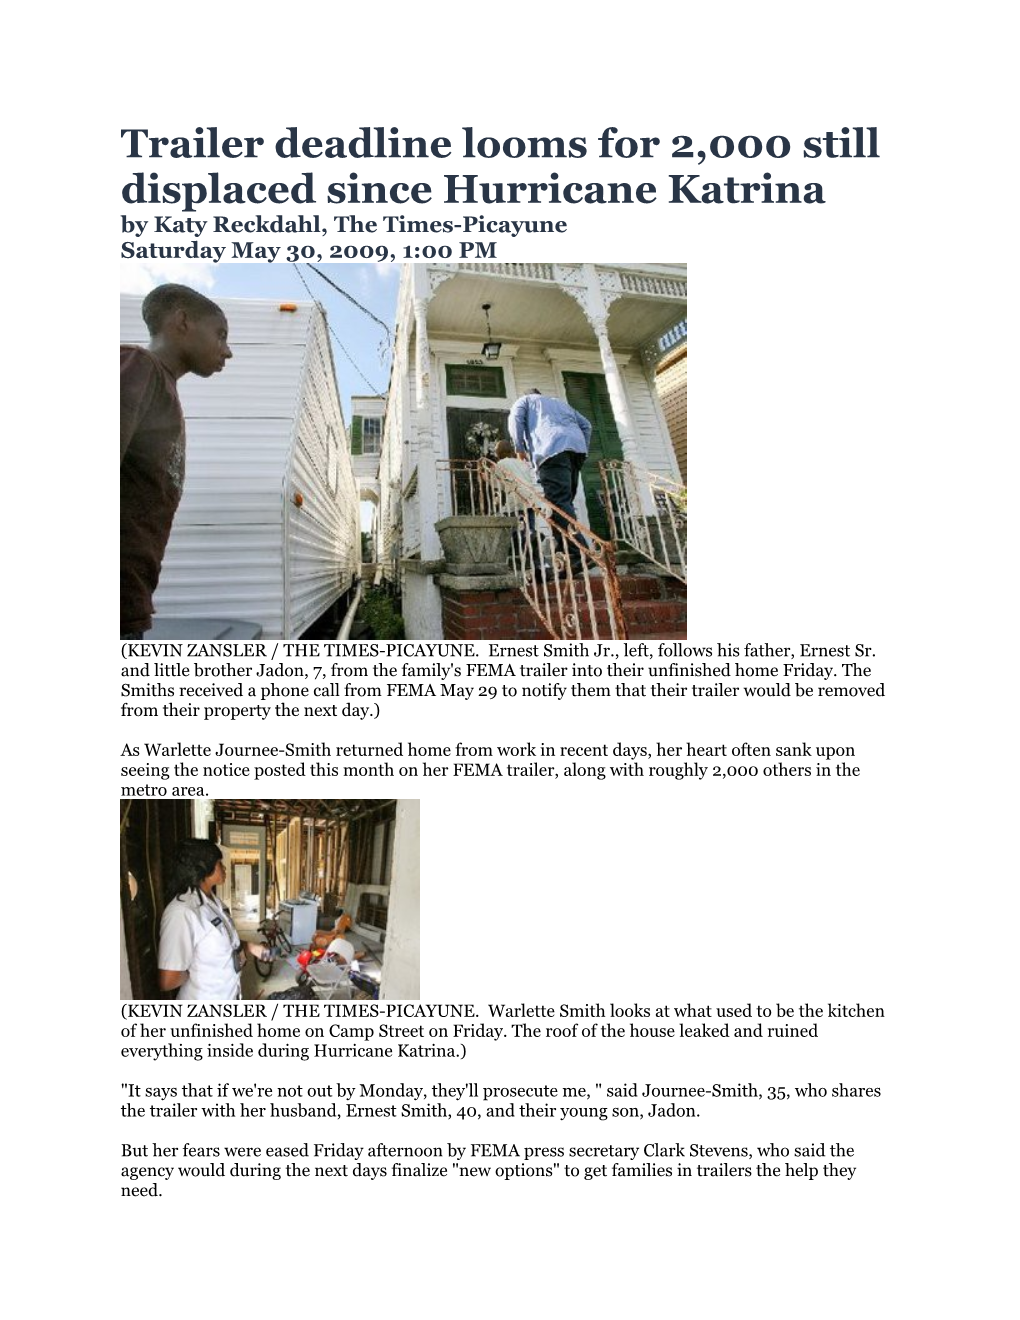 Trailer Deadline Looms for 2,000 Still Displaced Since Hurricane Katrina